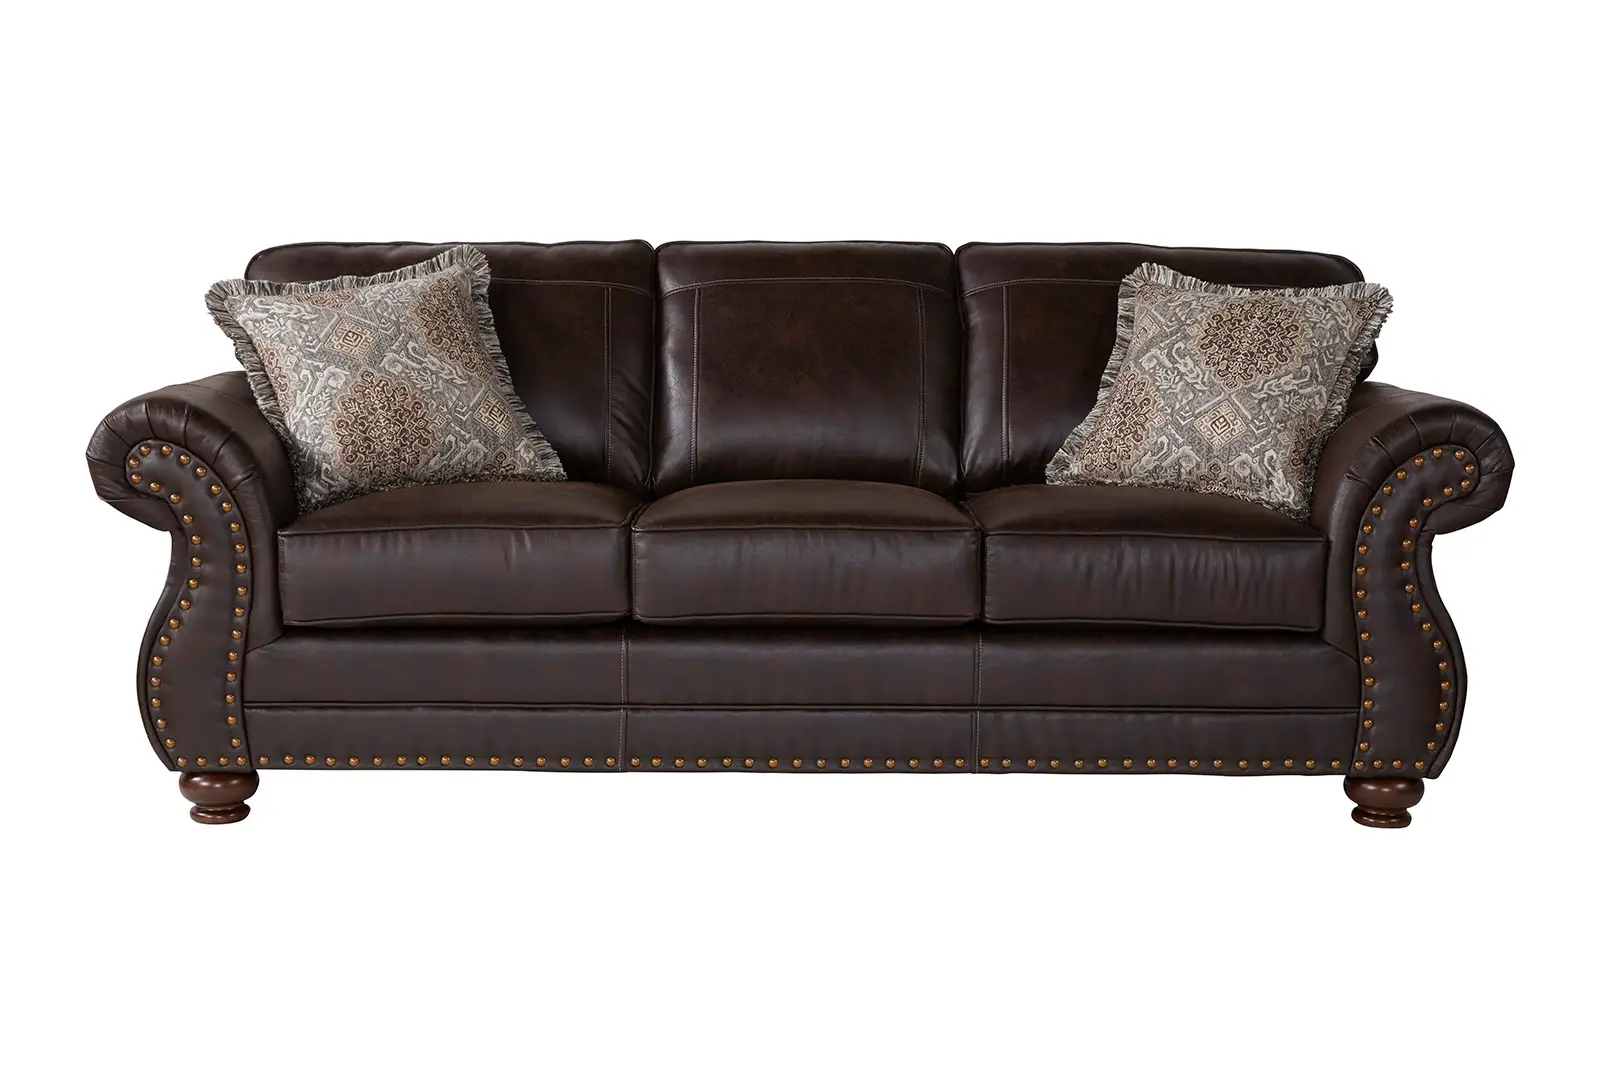 17400 Ridgeline Brownie sofa